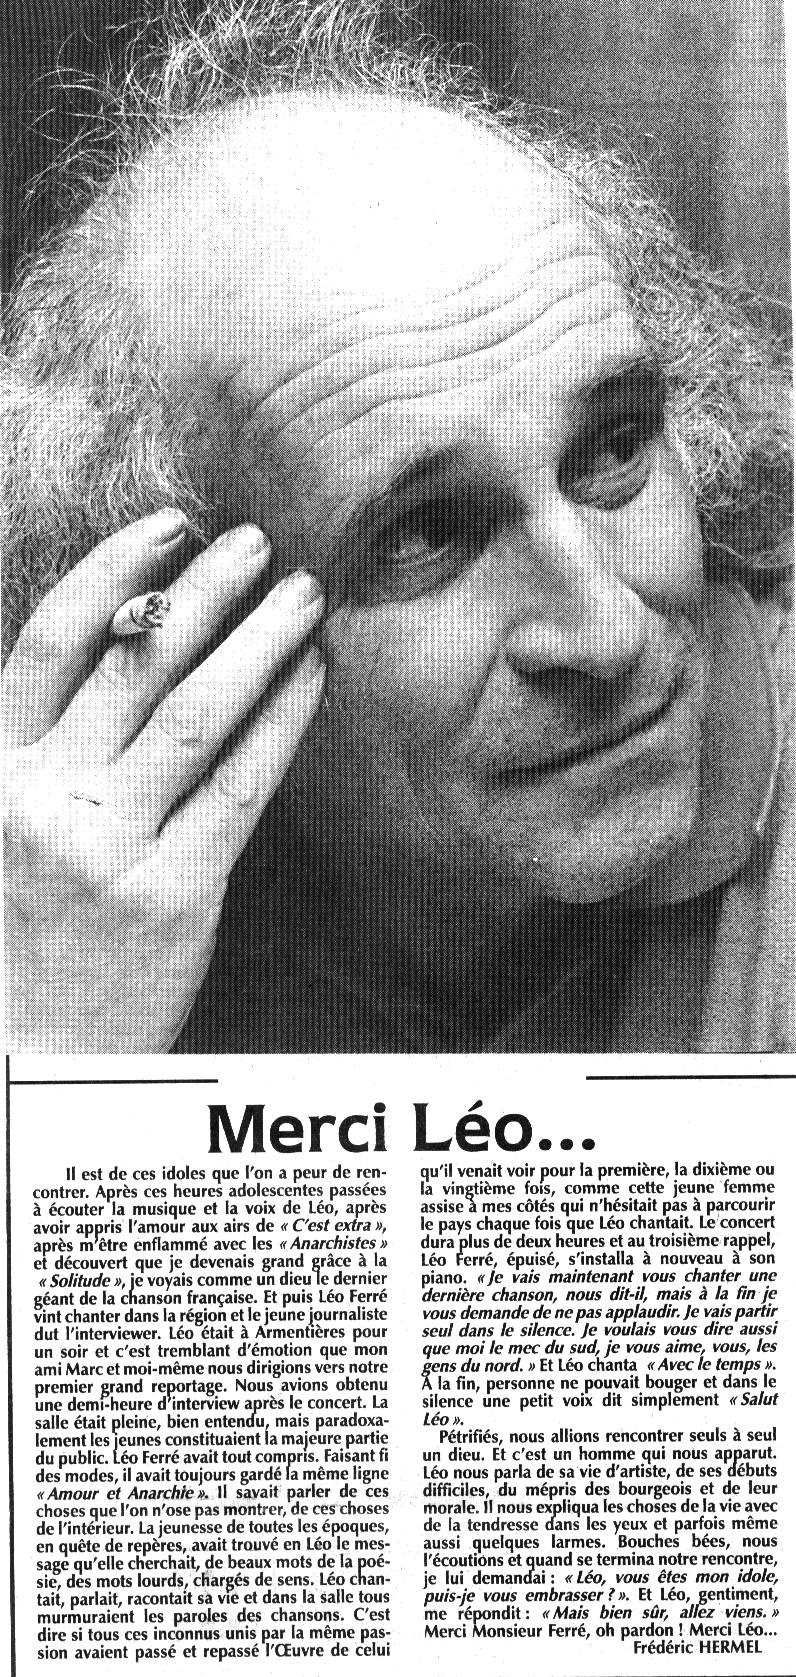 Léo Ferré - Merci Léo Ferré...